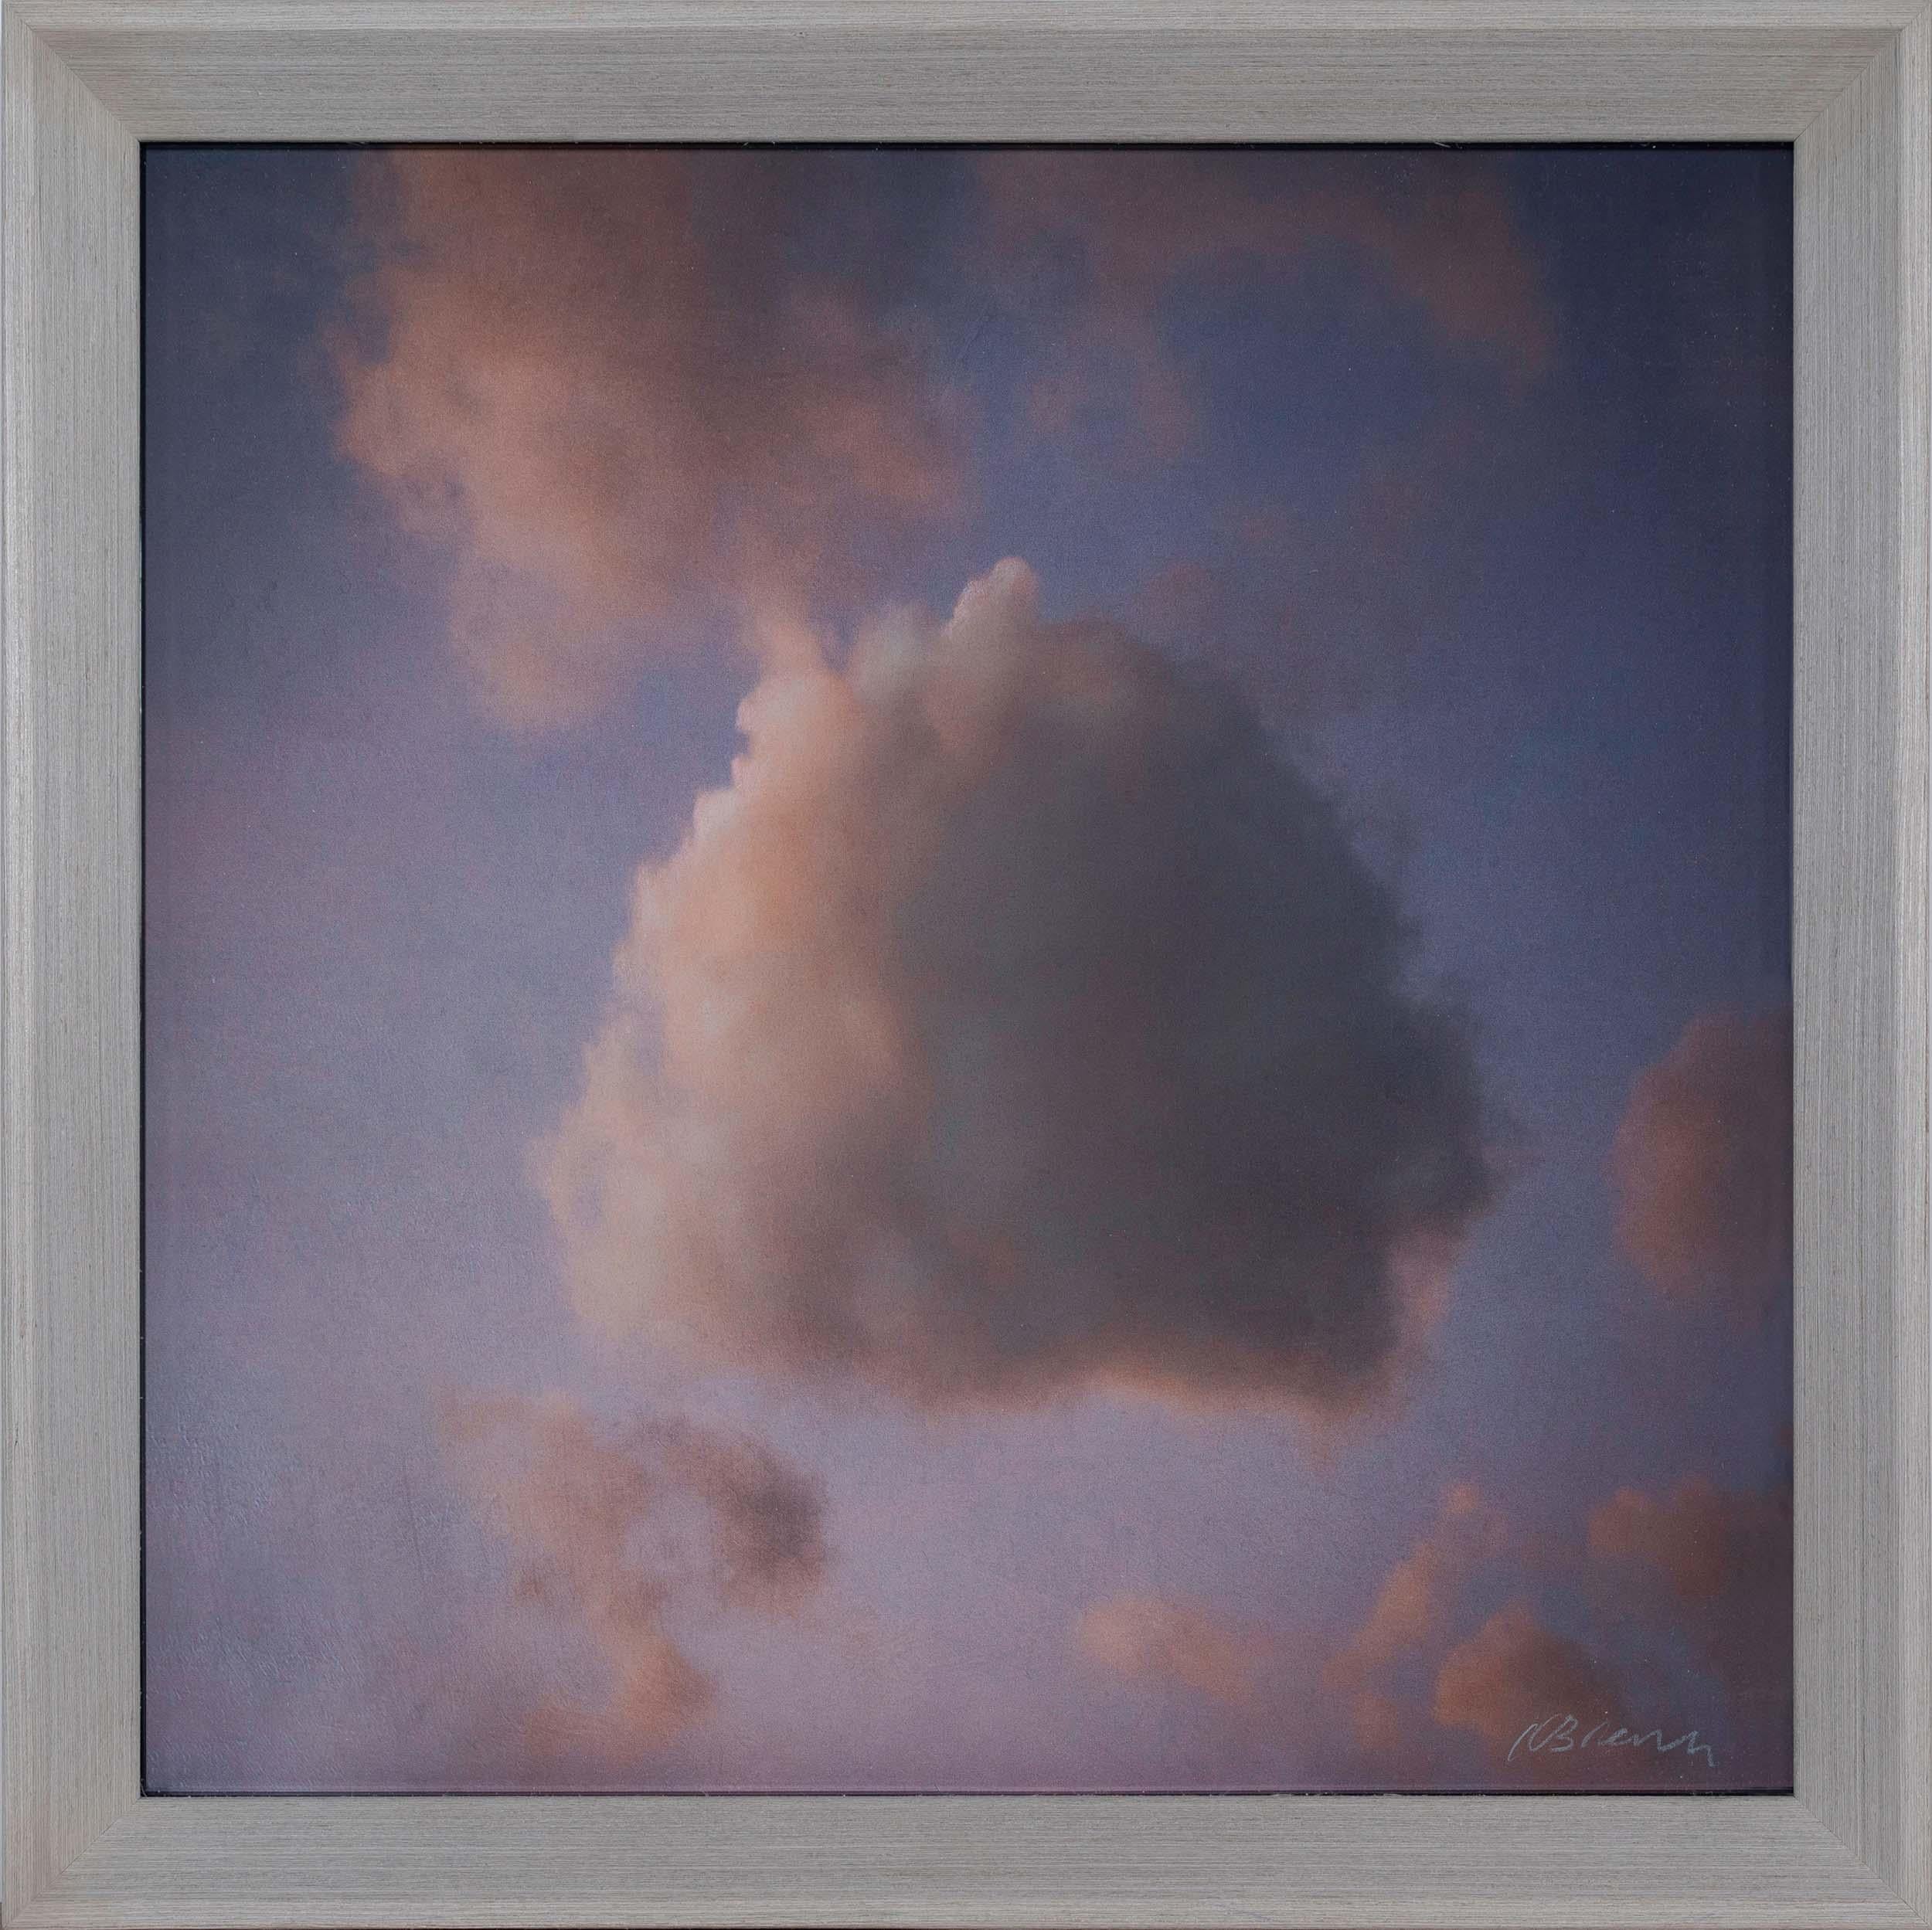 Kate Breakey Landscape Photograph - Twelve Clouds, Softly, Slowly (E)